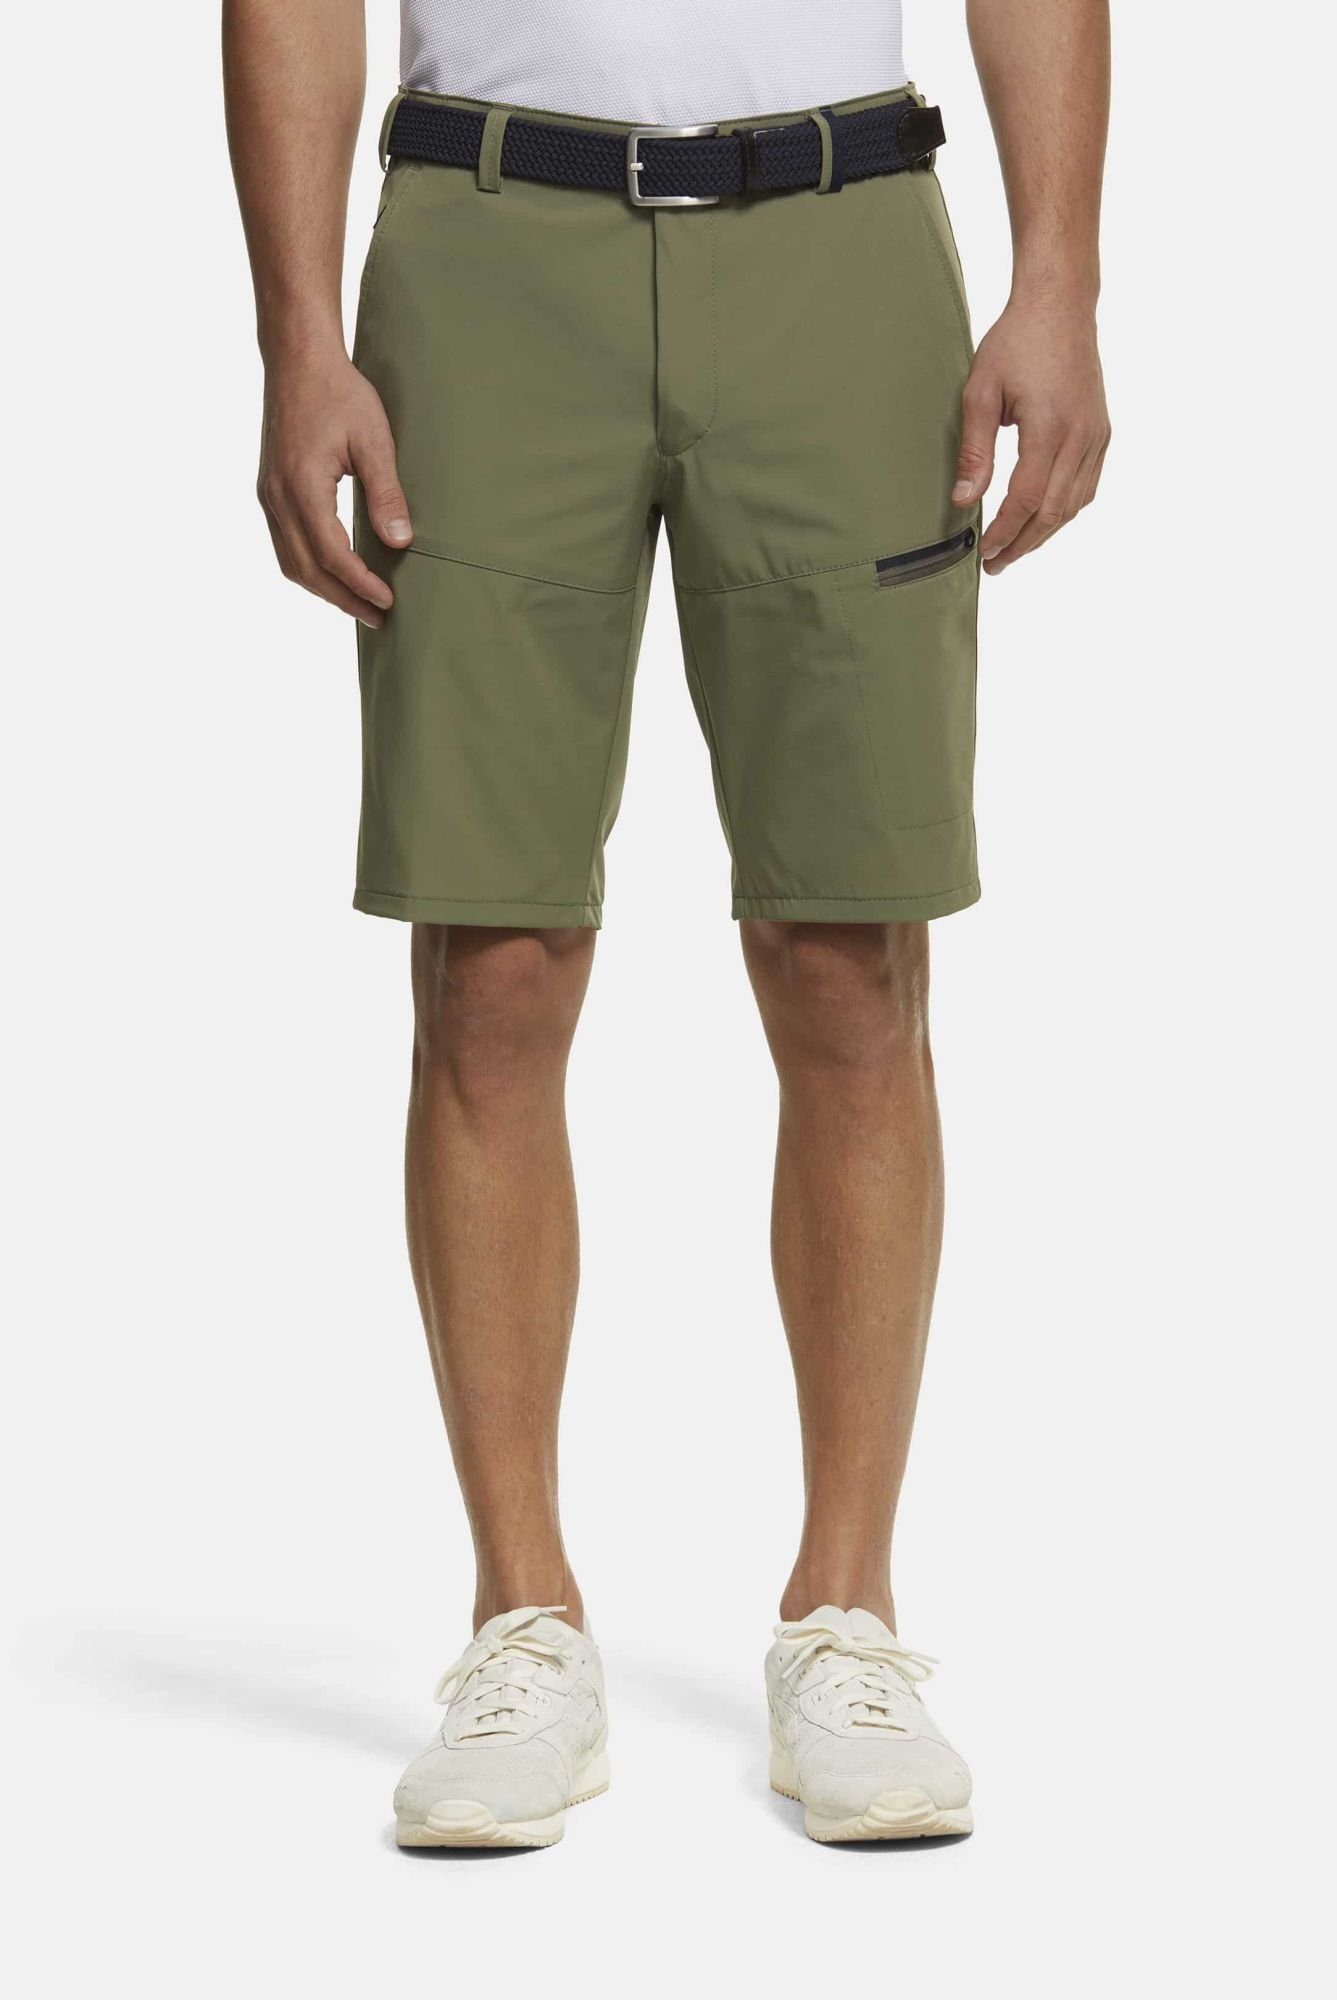 MEYER Shorts B-Arran mit Shirt-Stopper grün